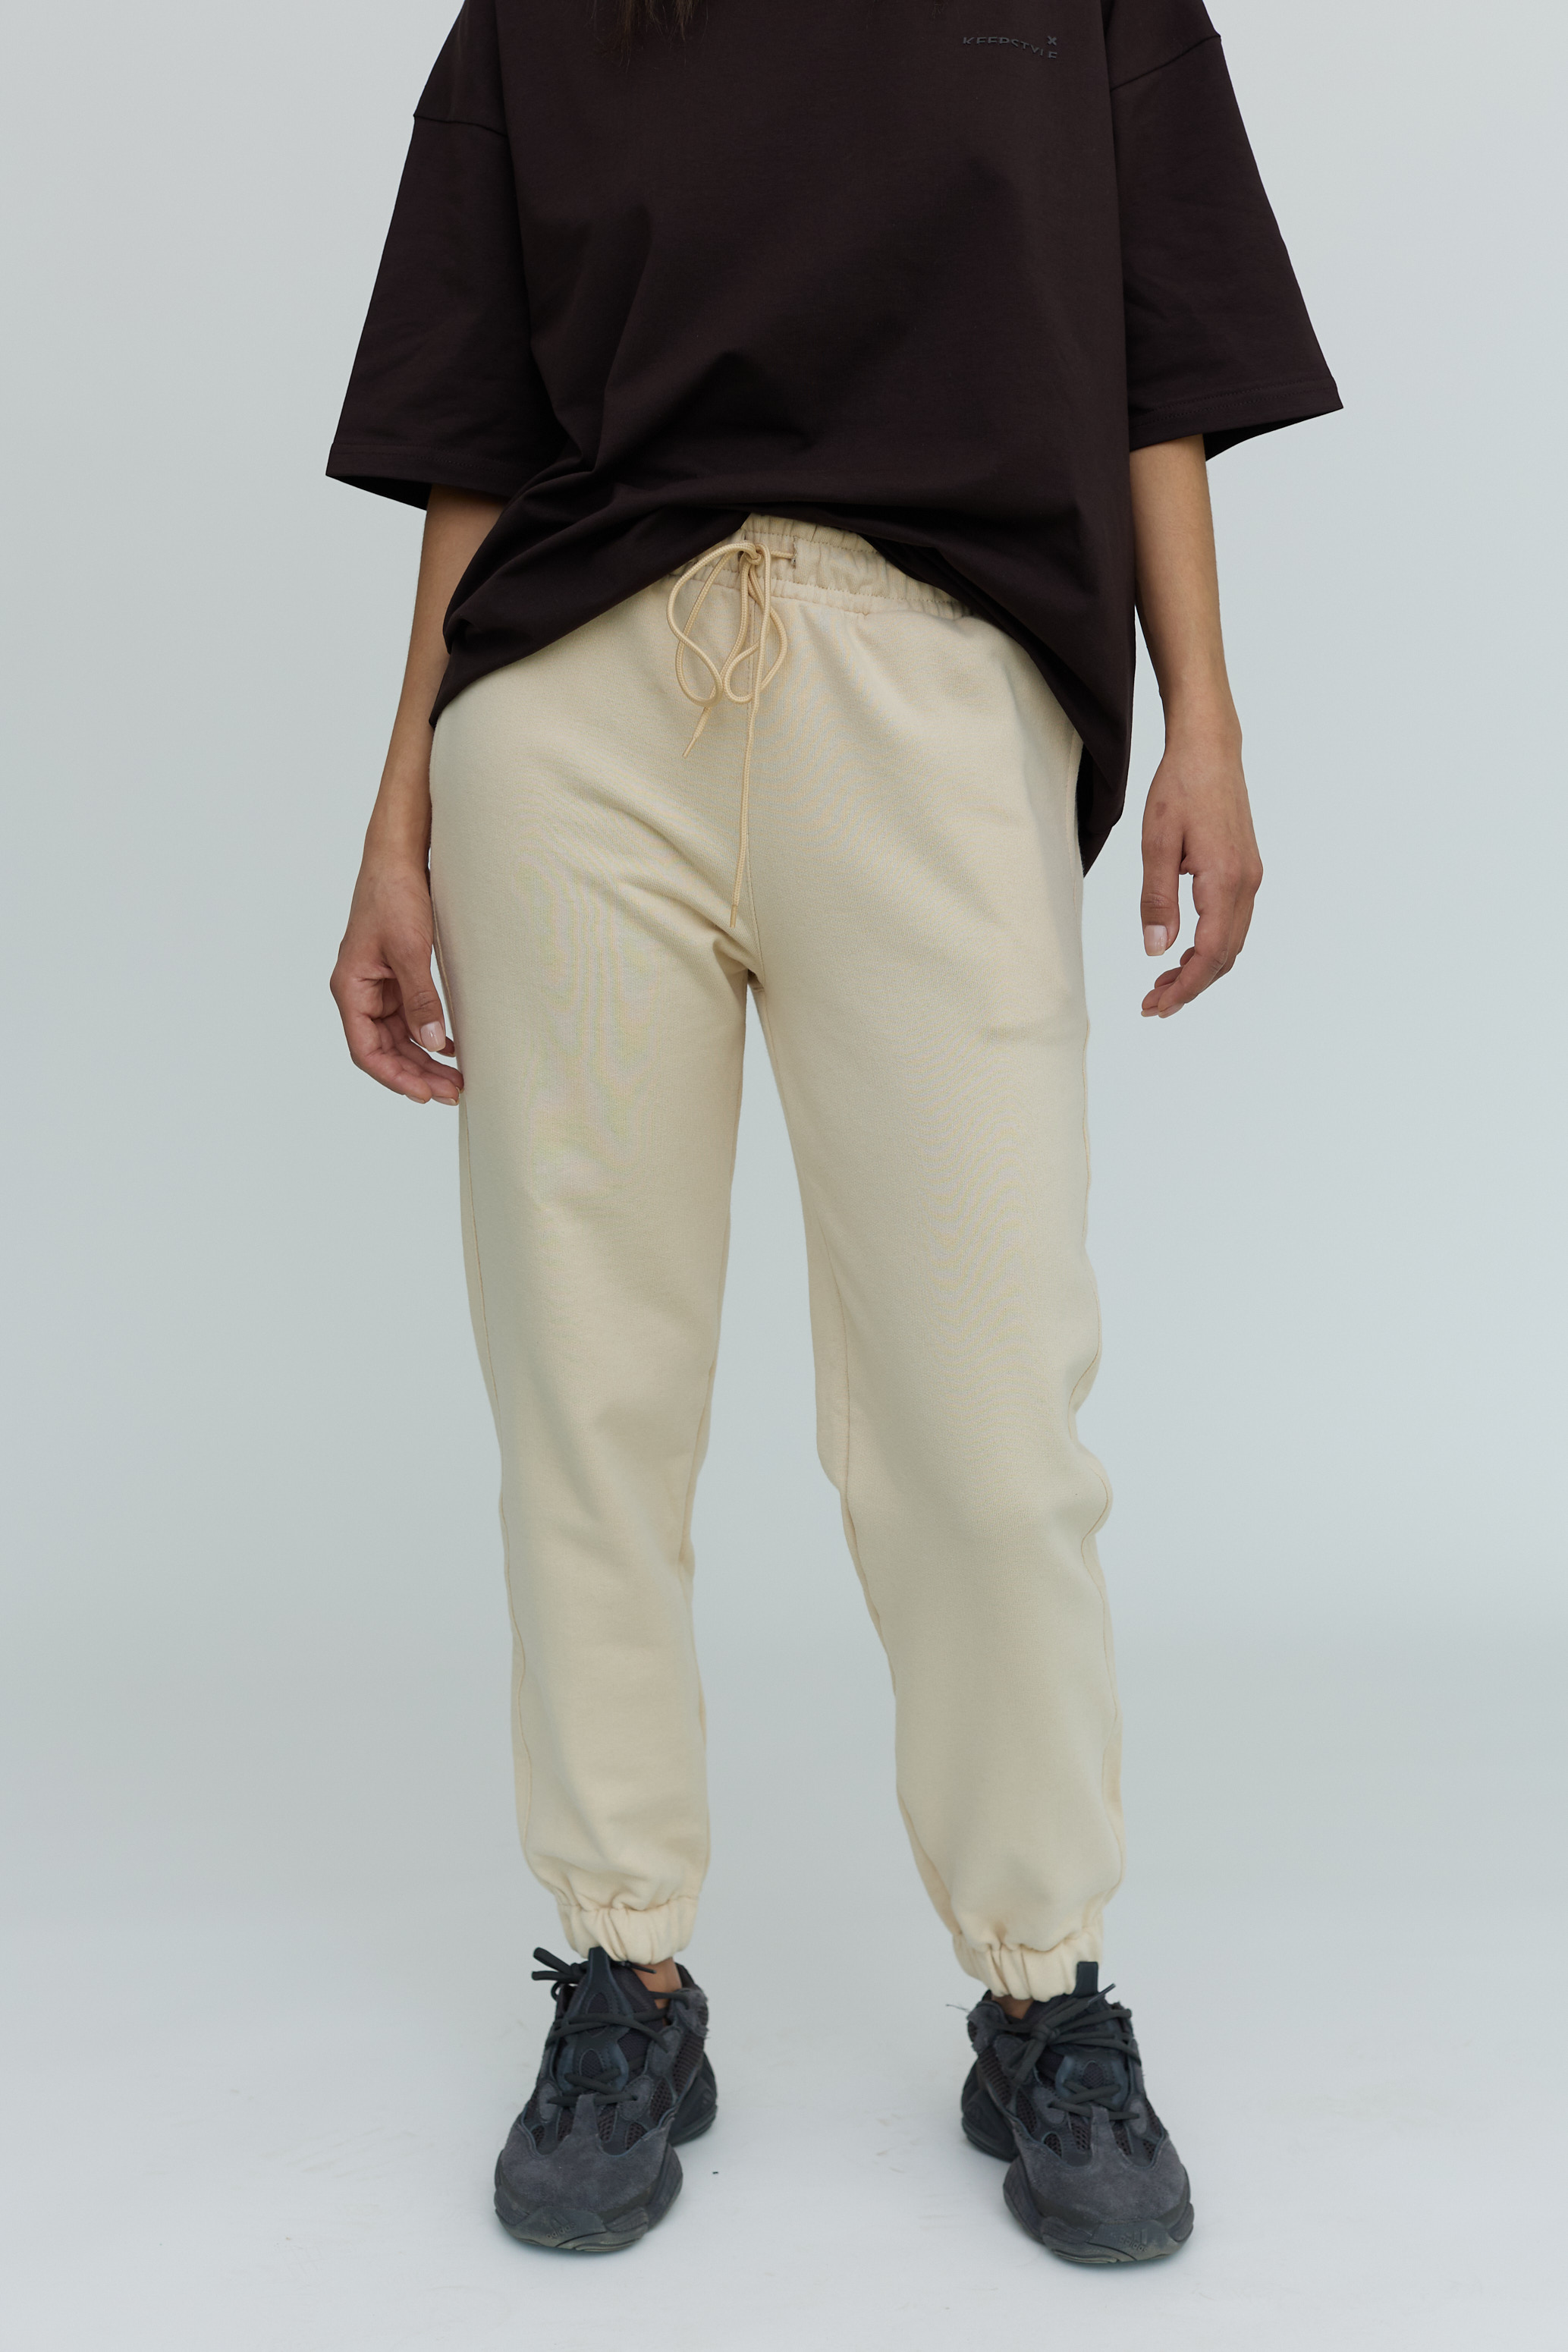 unisex pants in cream color